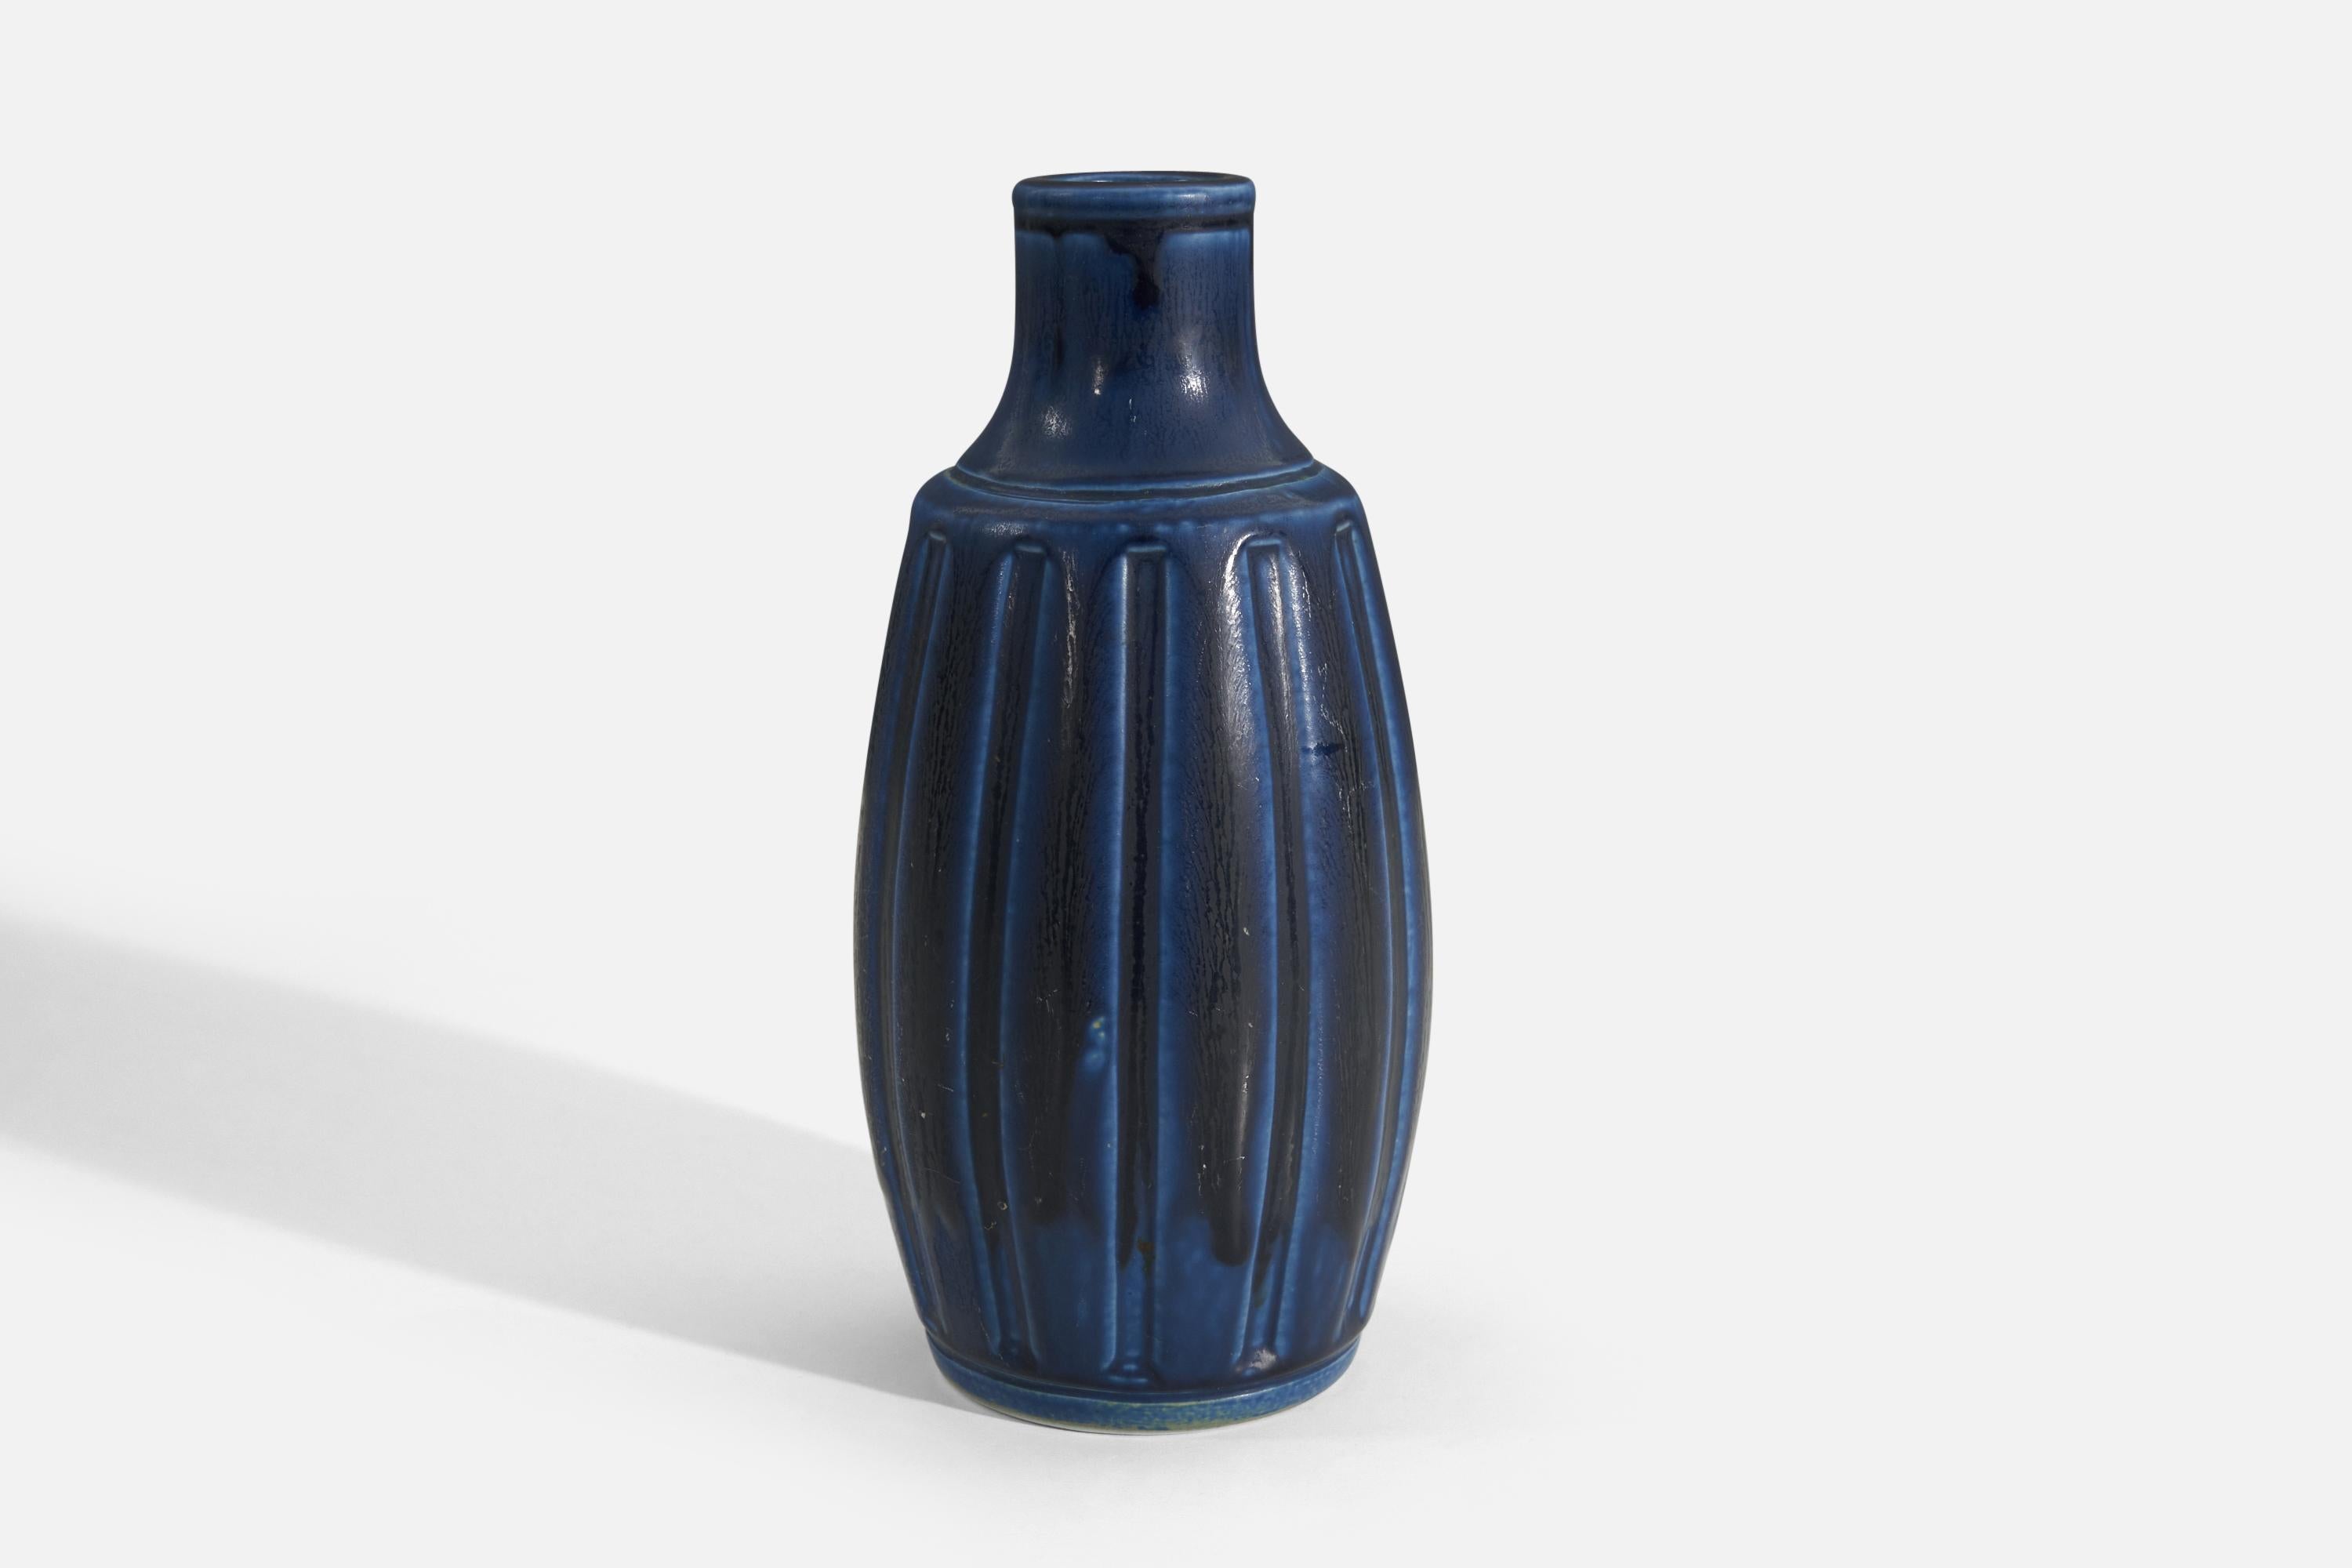 A fluted blue-glazed stoneware vase designed by Wilhelm Kåge and produced by Gustavsberg, Sweden, c. 1950s.

